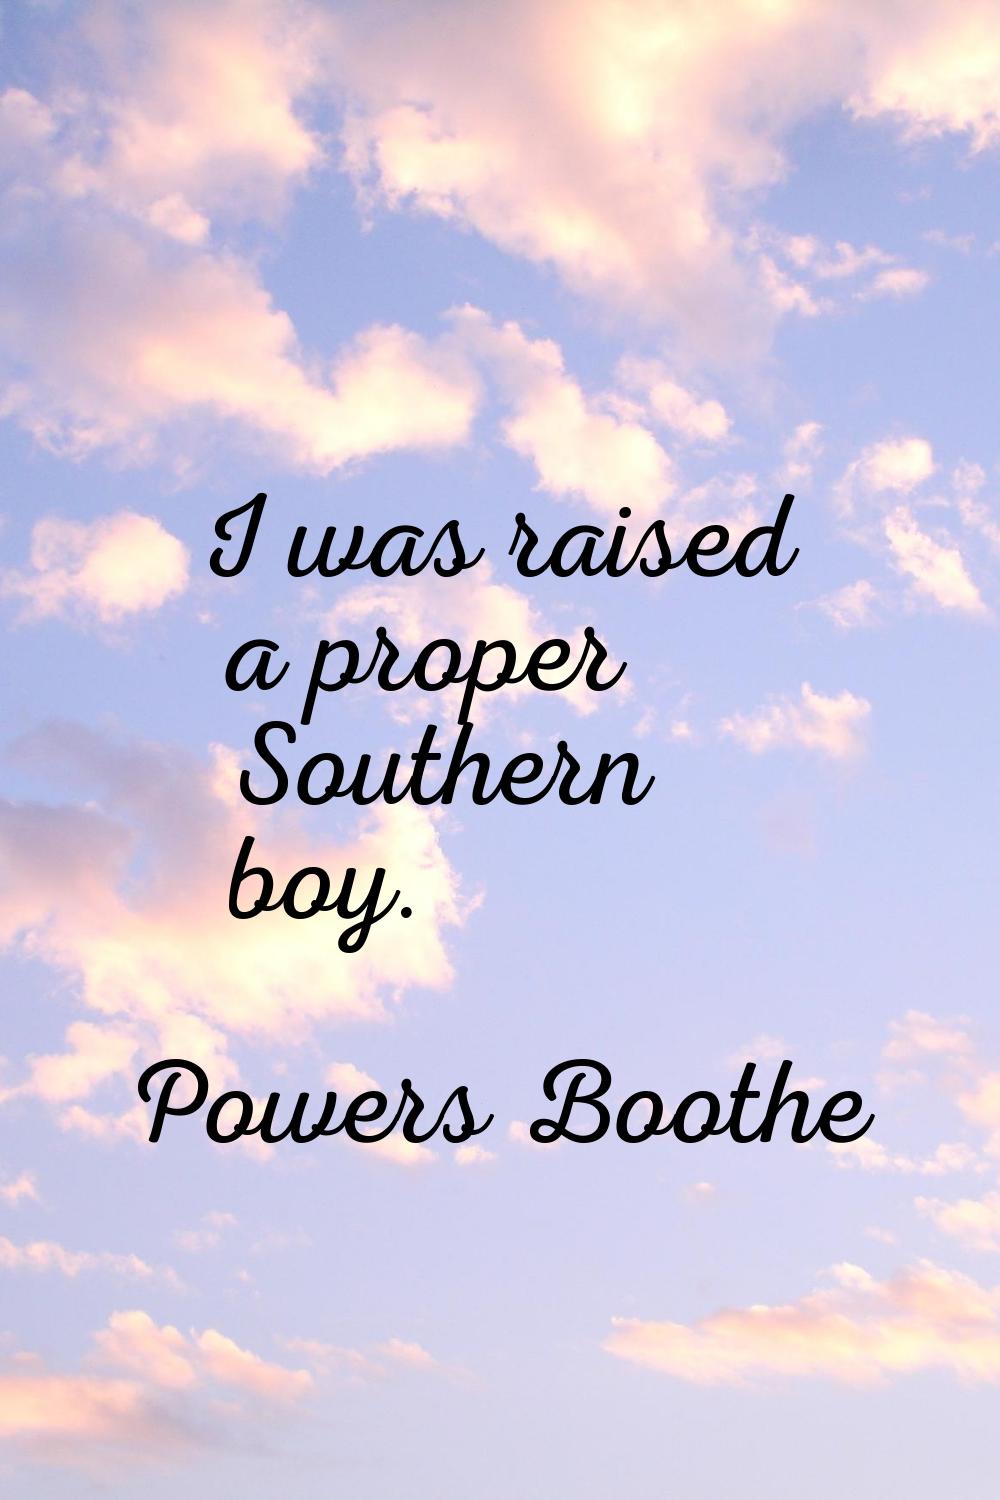 I was raised a proper Southern boy.